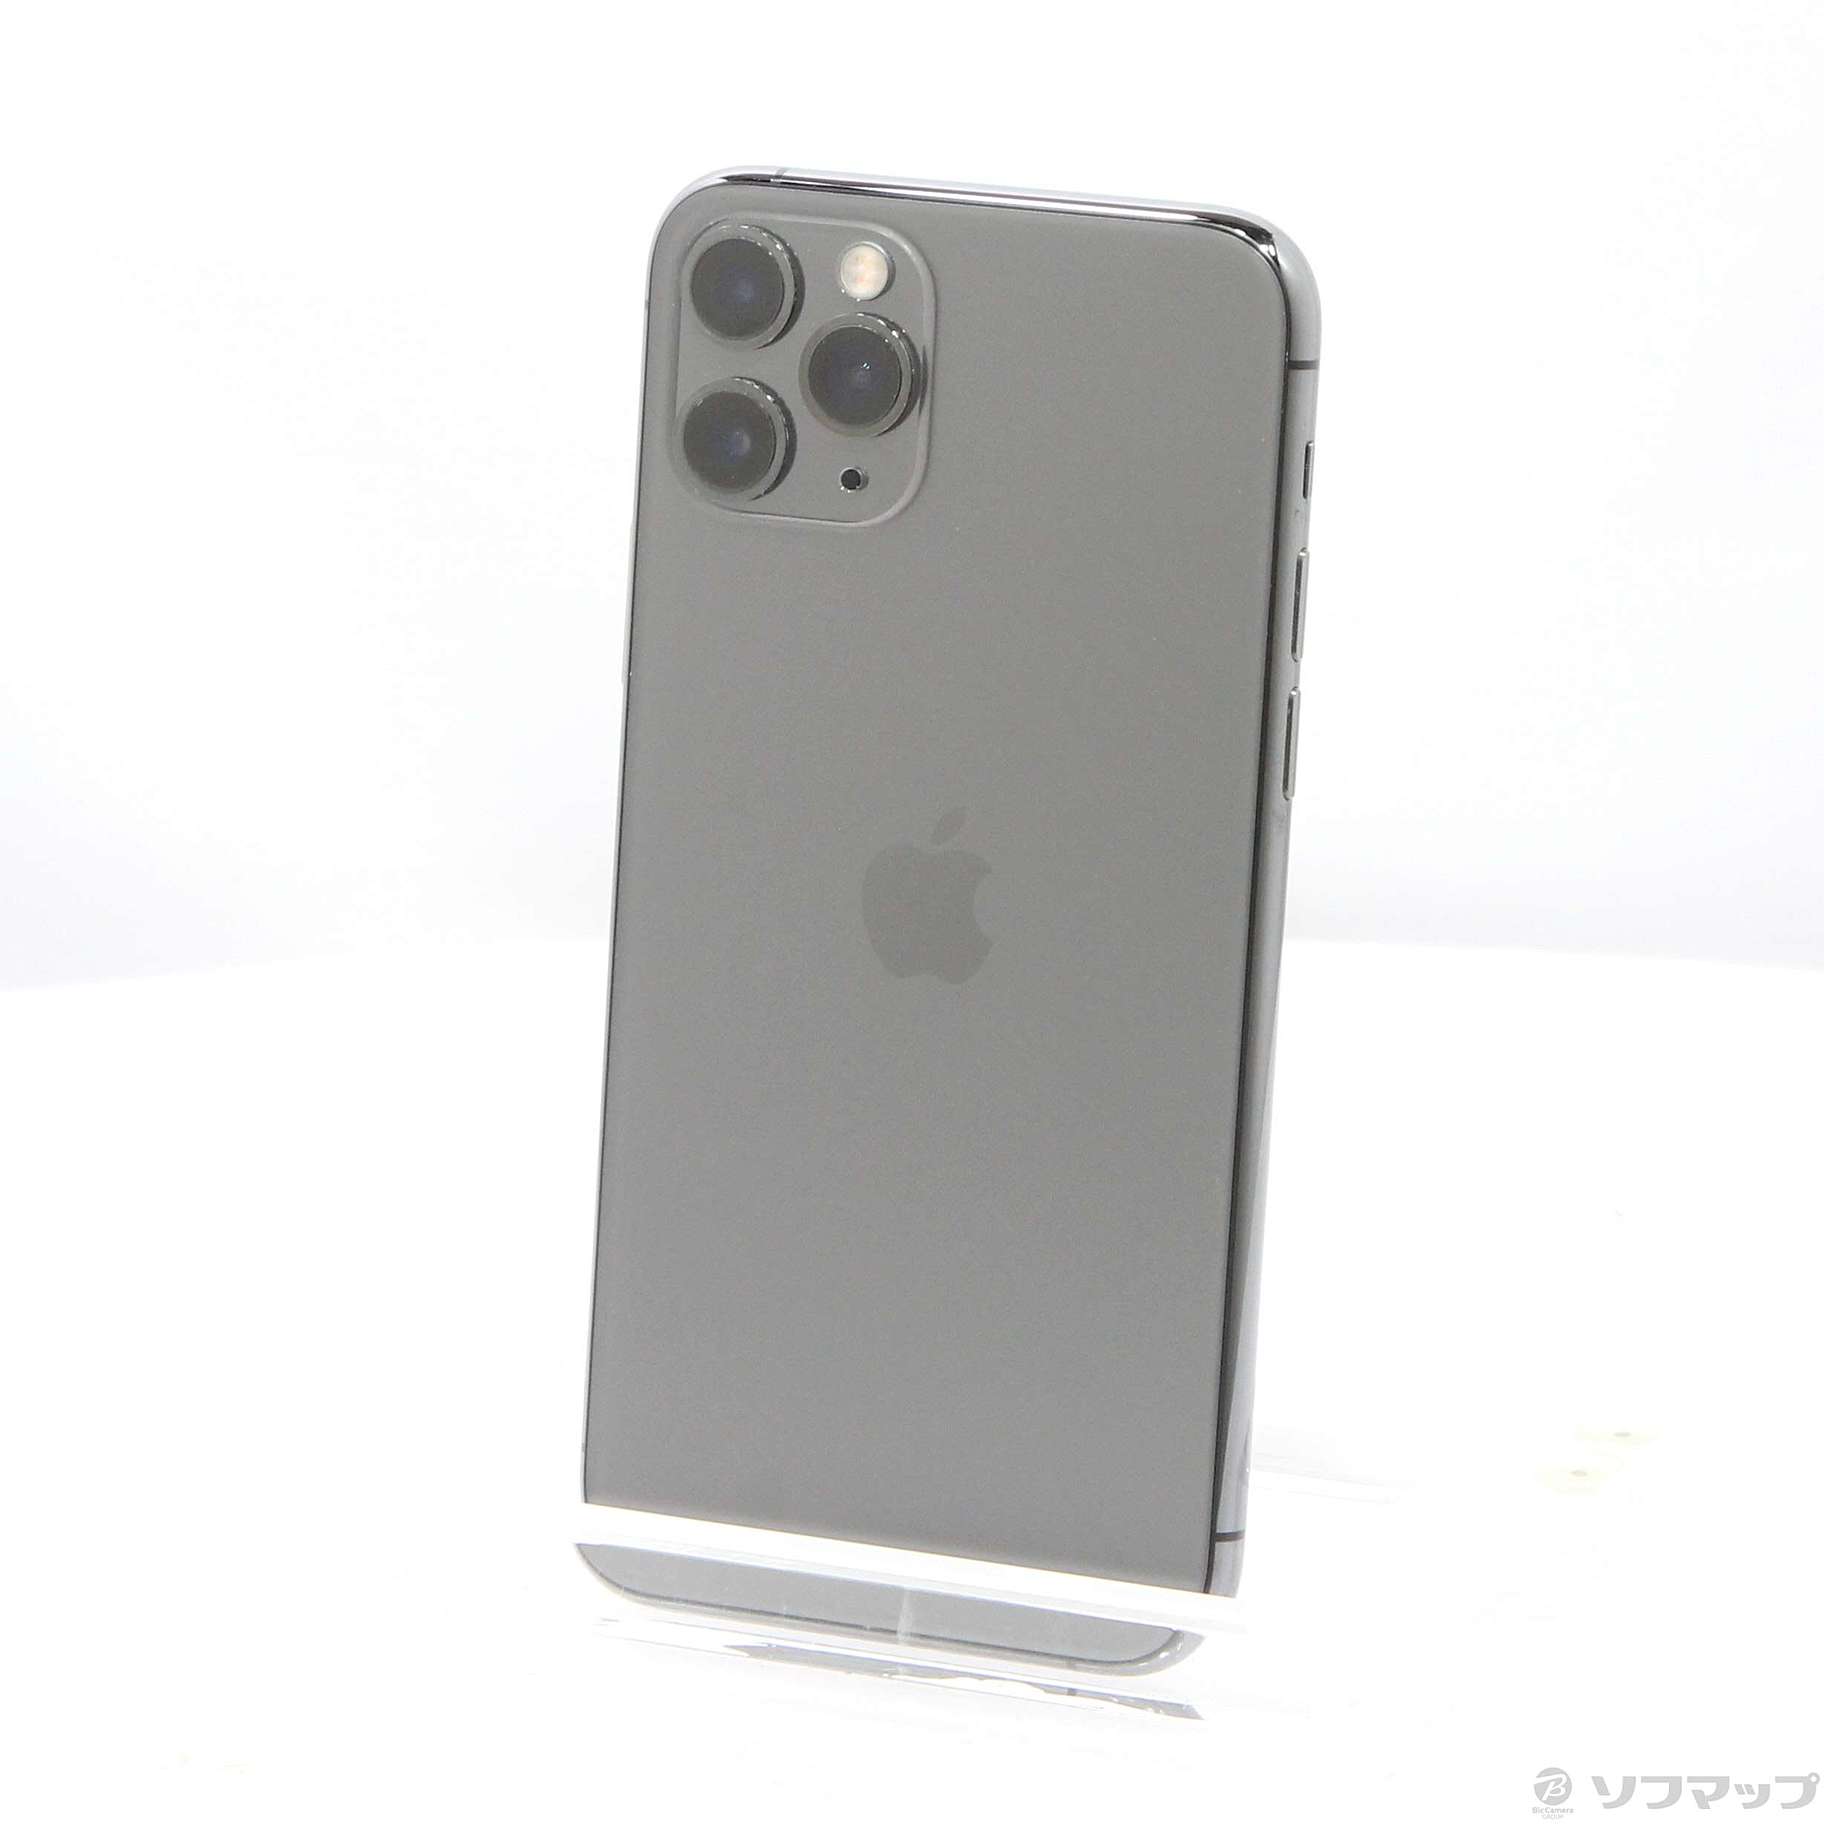 【美品】iPhone11 Pro 64GB Space Gray